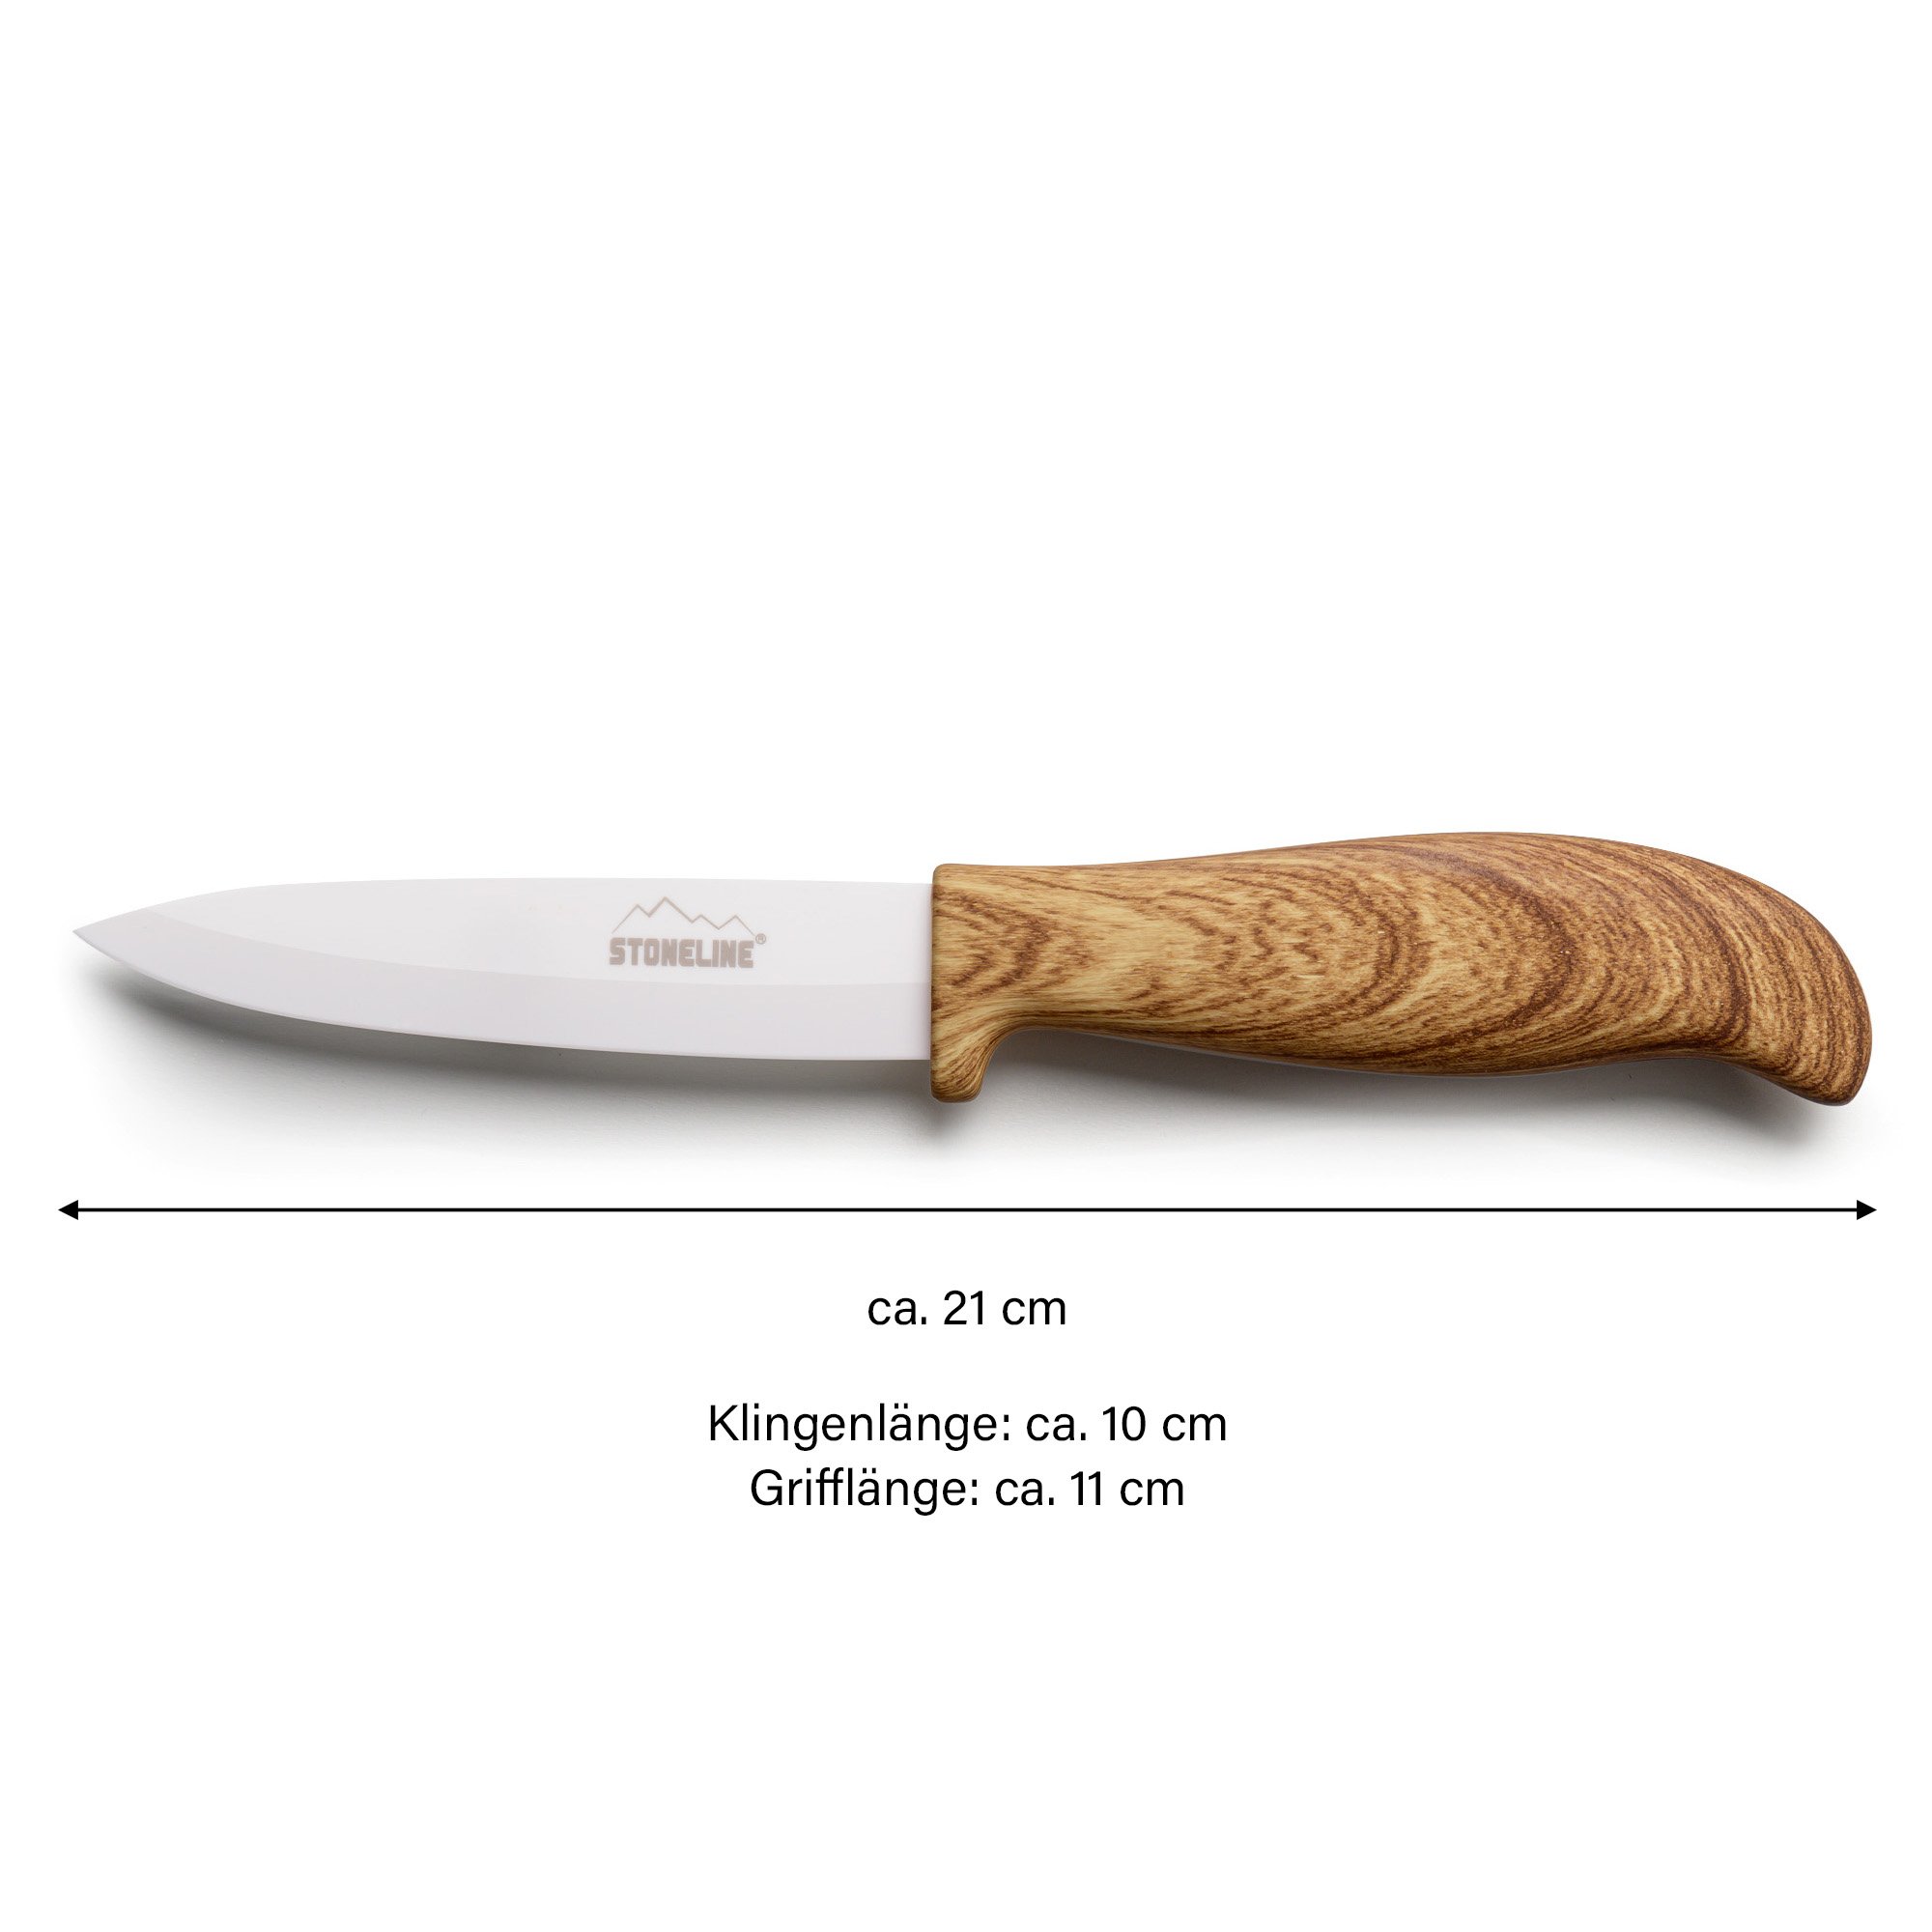 STONELINE® CERAMIC Knife 21 cm All-Purpose Knife, Safety Sheath | Back to Nature